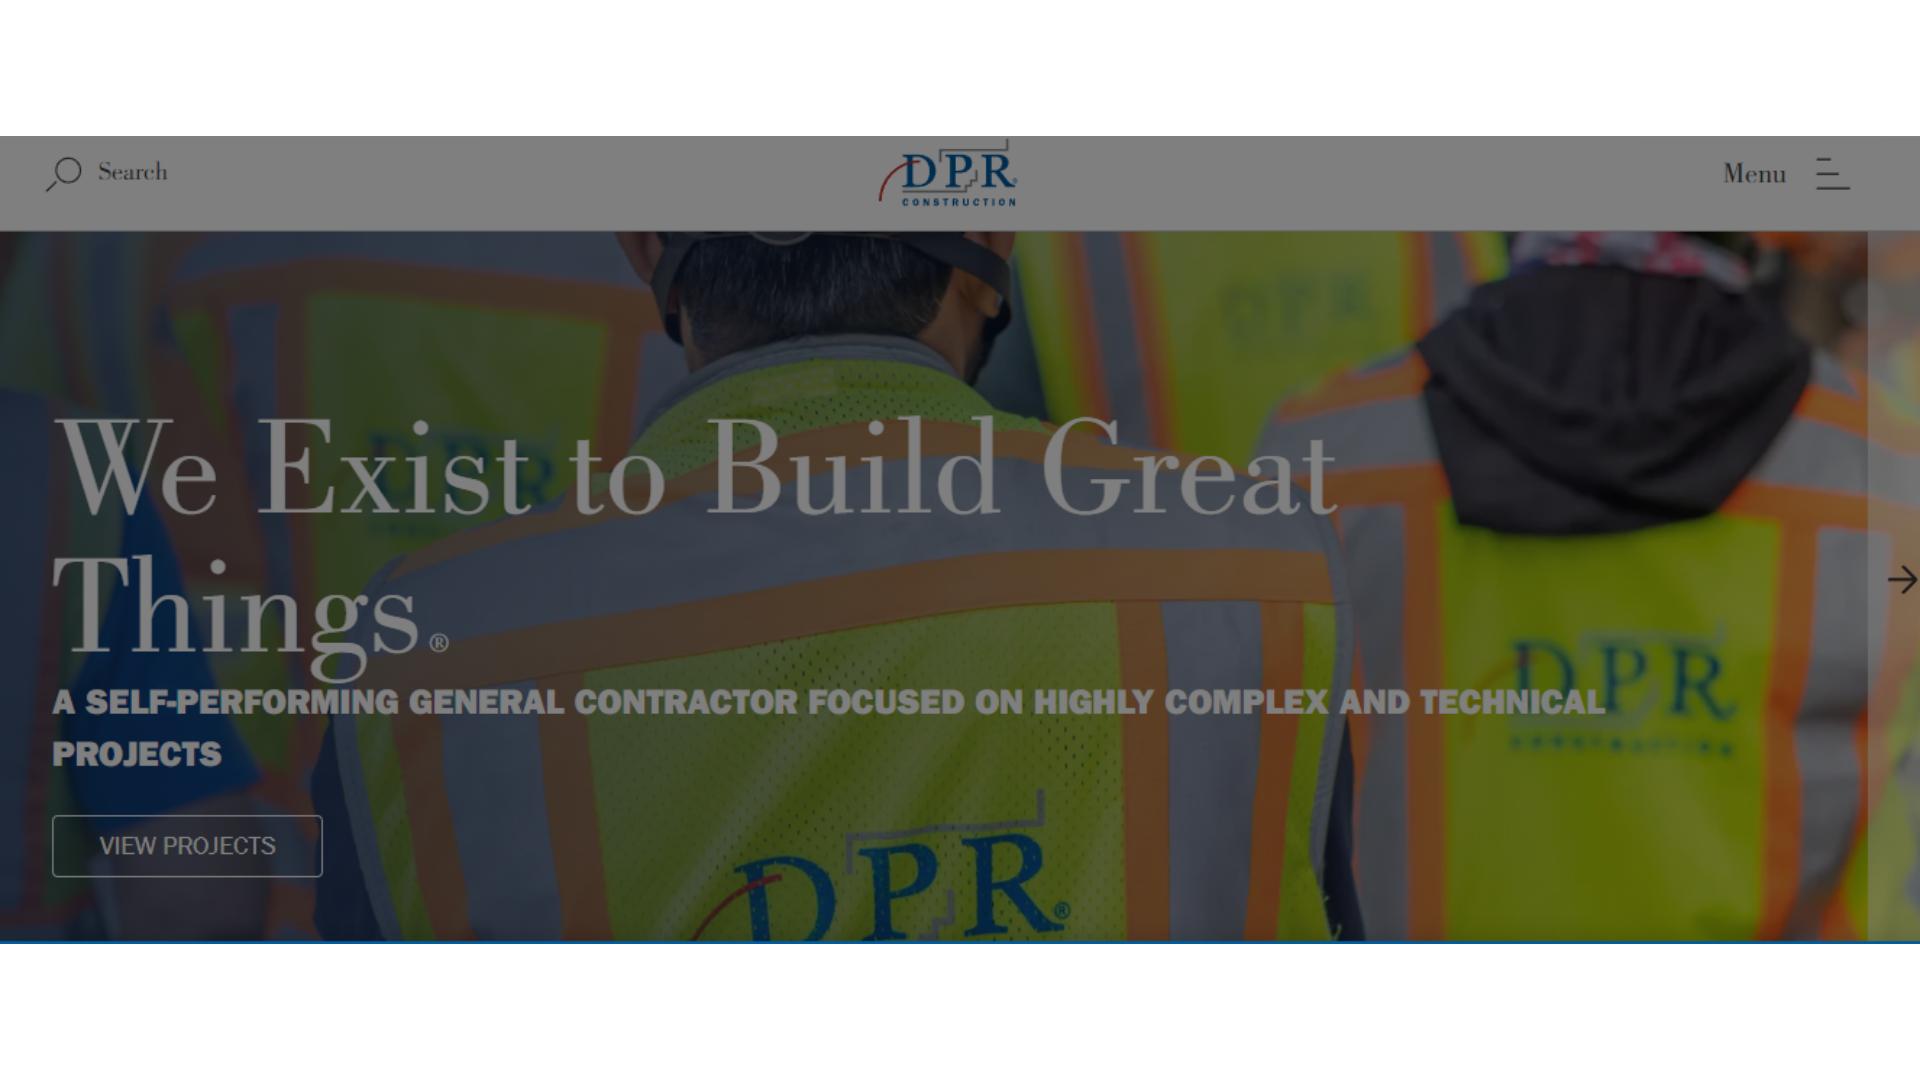 DPR Construction